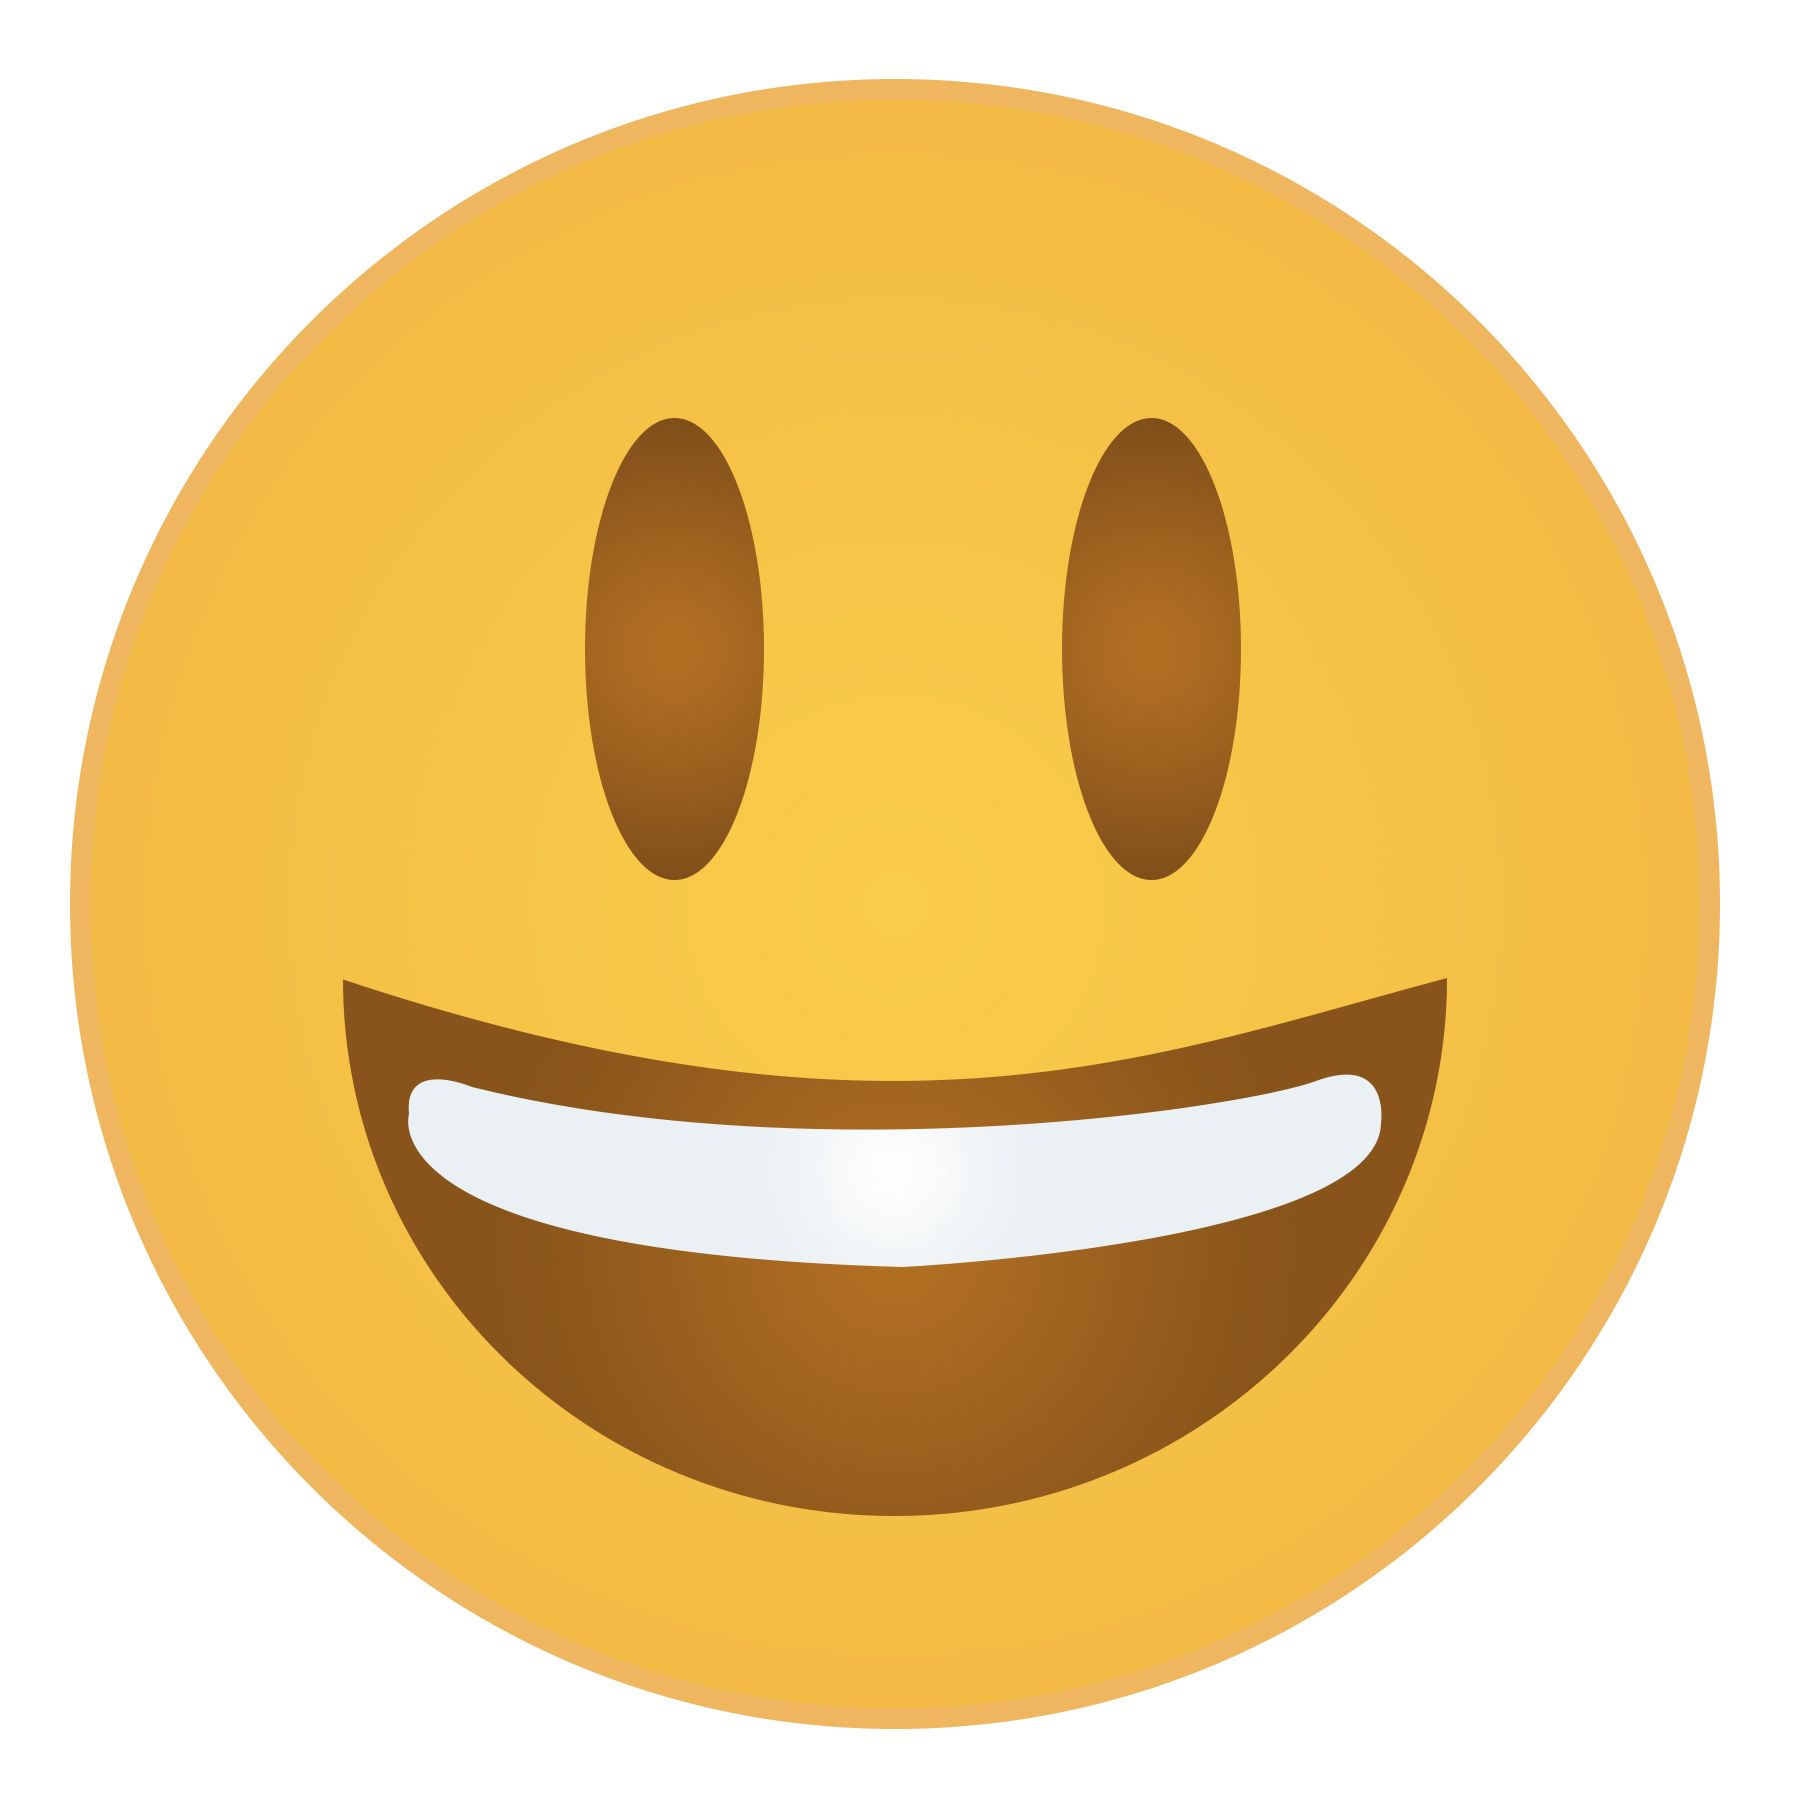 Free Printable Emoji Faces - Printable  | Emoji In 2019 - Free Printable Sad Faces